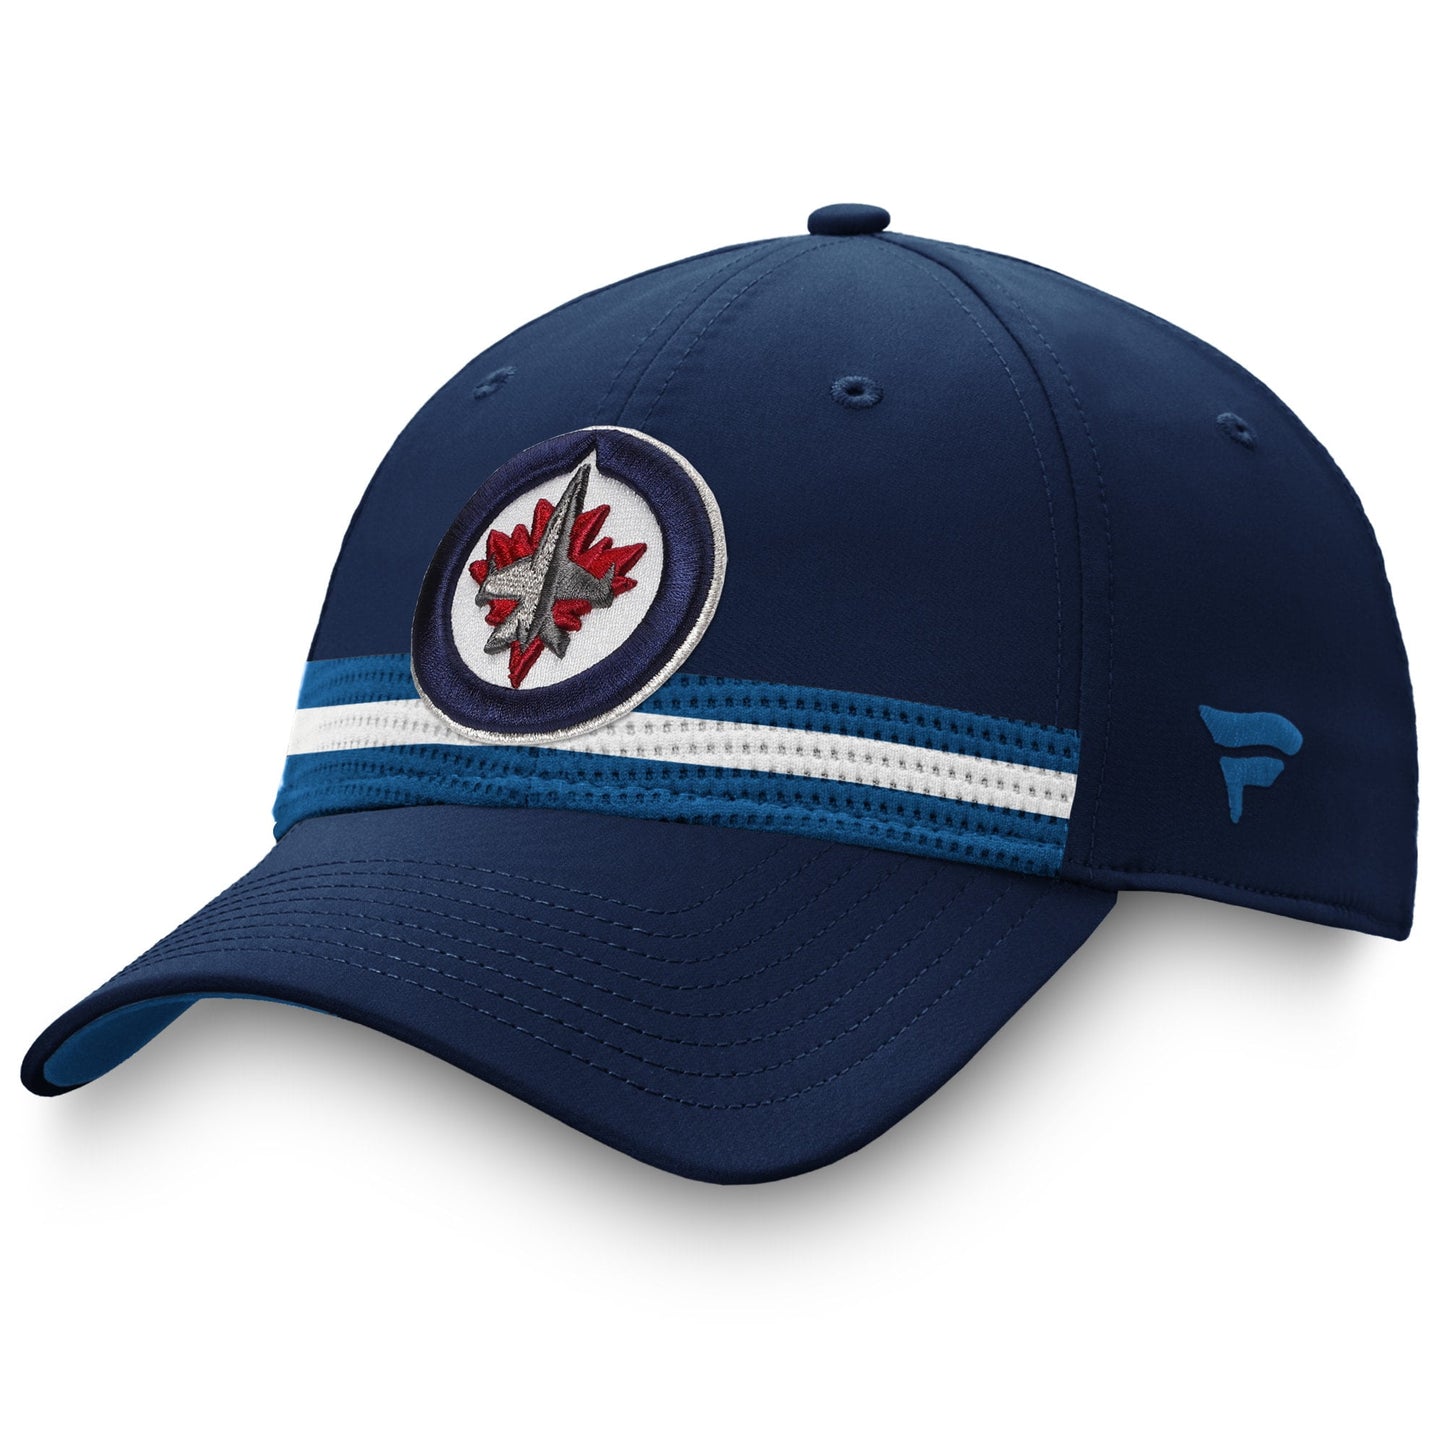 Men's Fanatics Branded Navy/Blue Winnipeg Jets 2020 NHL Draft Authentic Pro Flex Hat